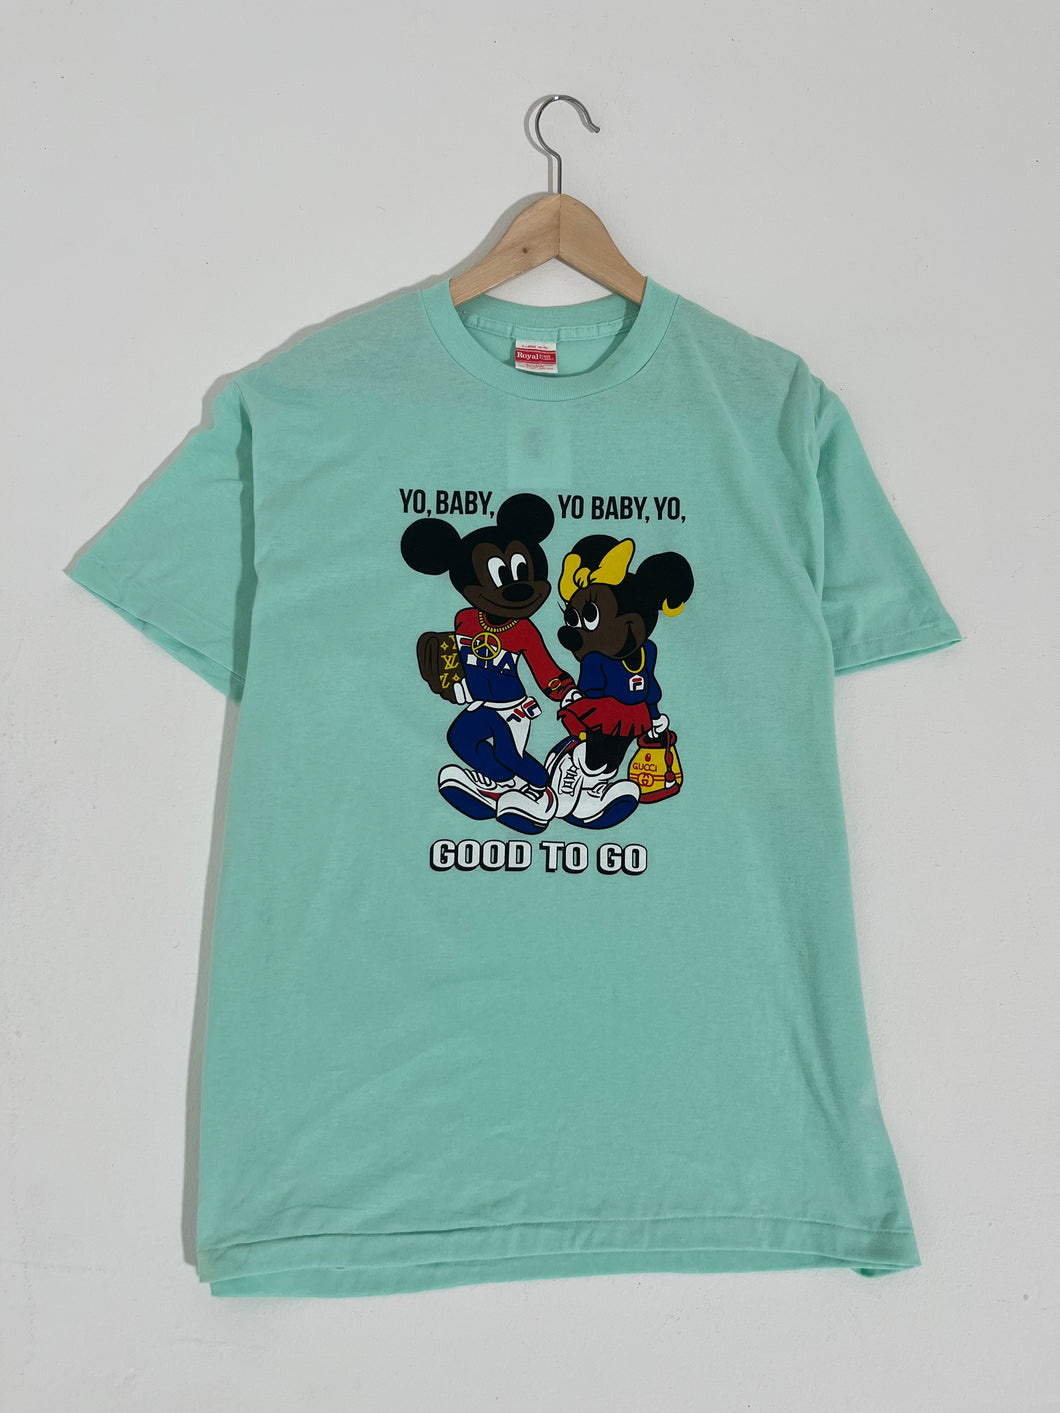 Vintage Teal Mickey & Minnie Mouse 